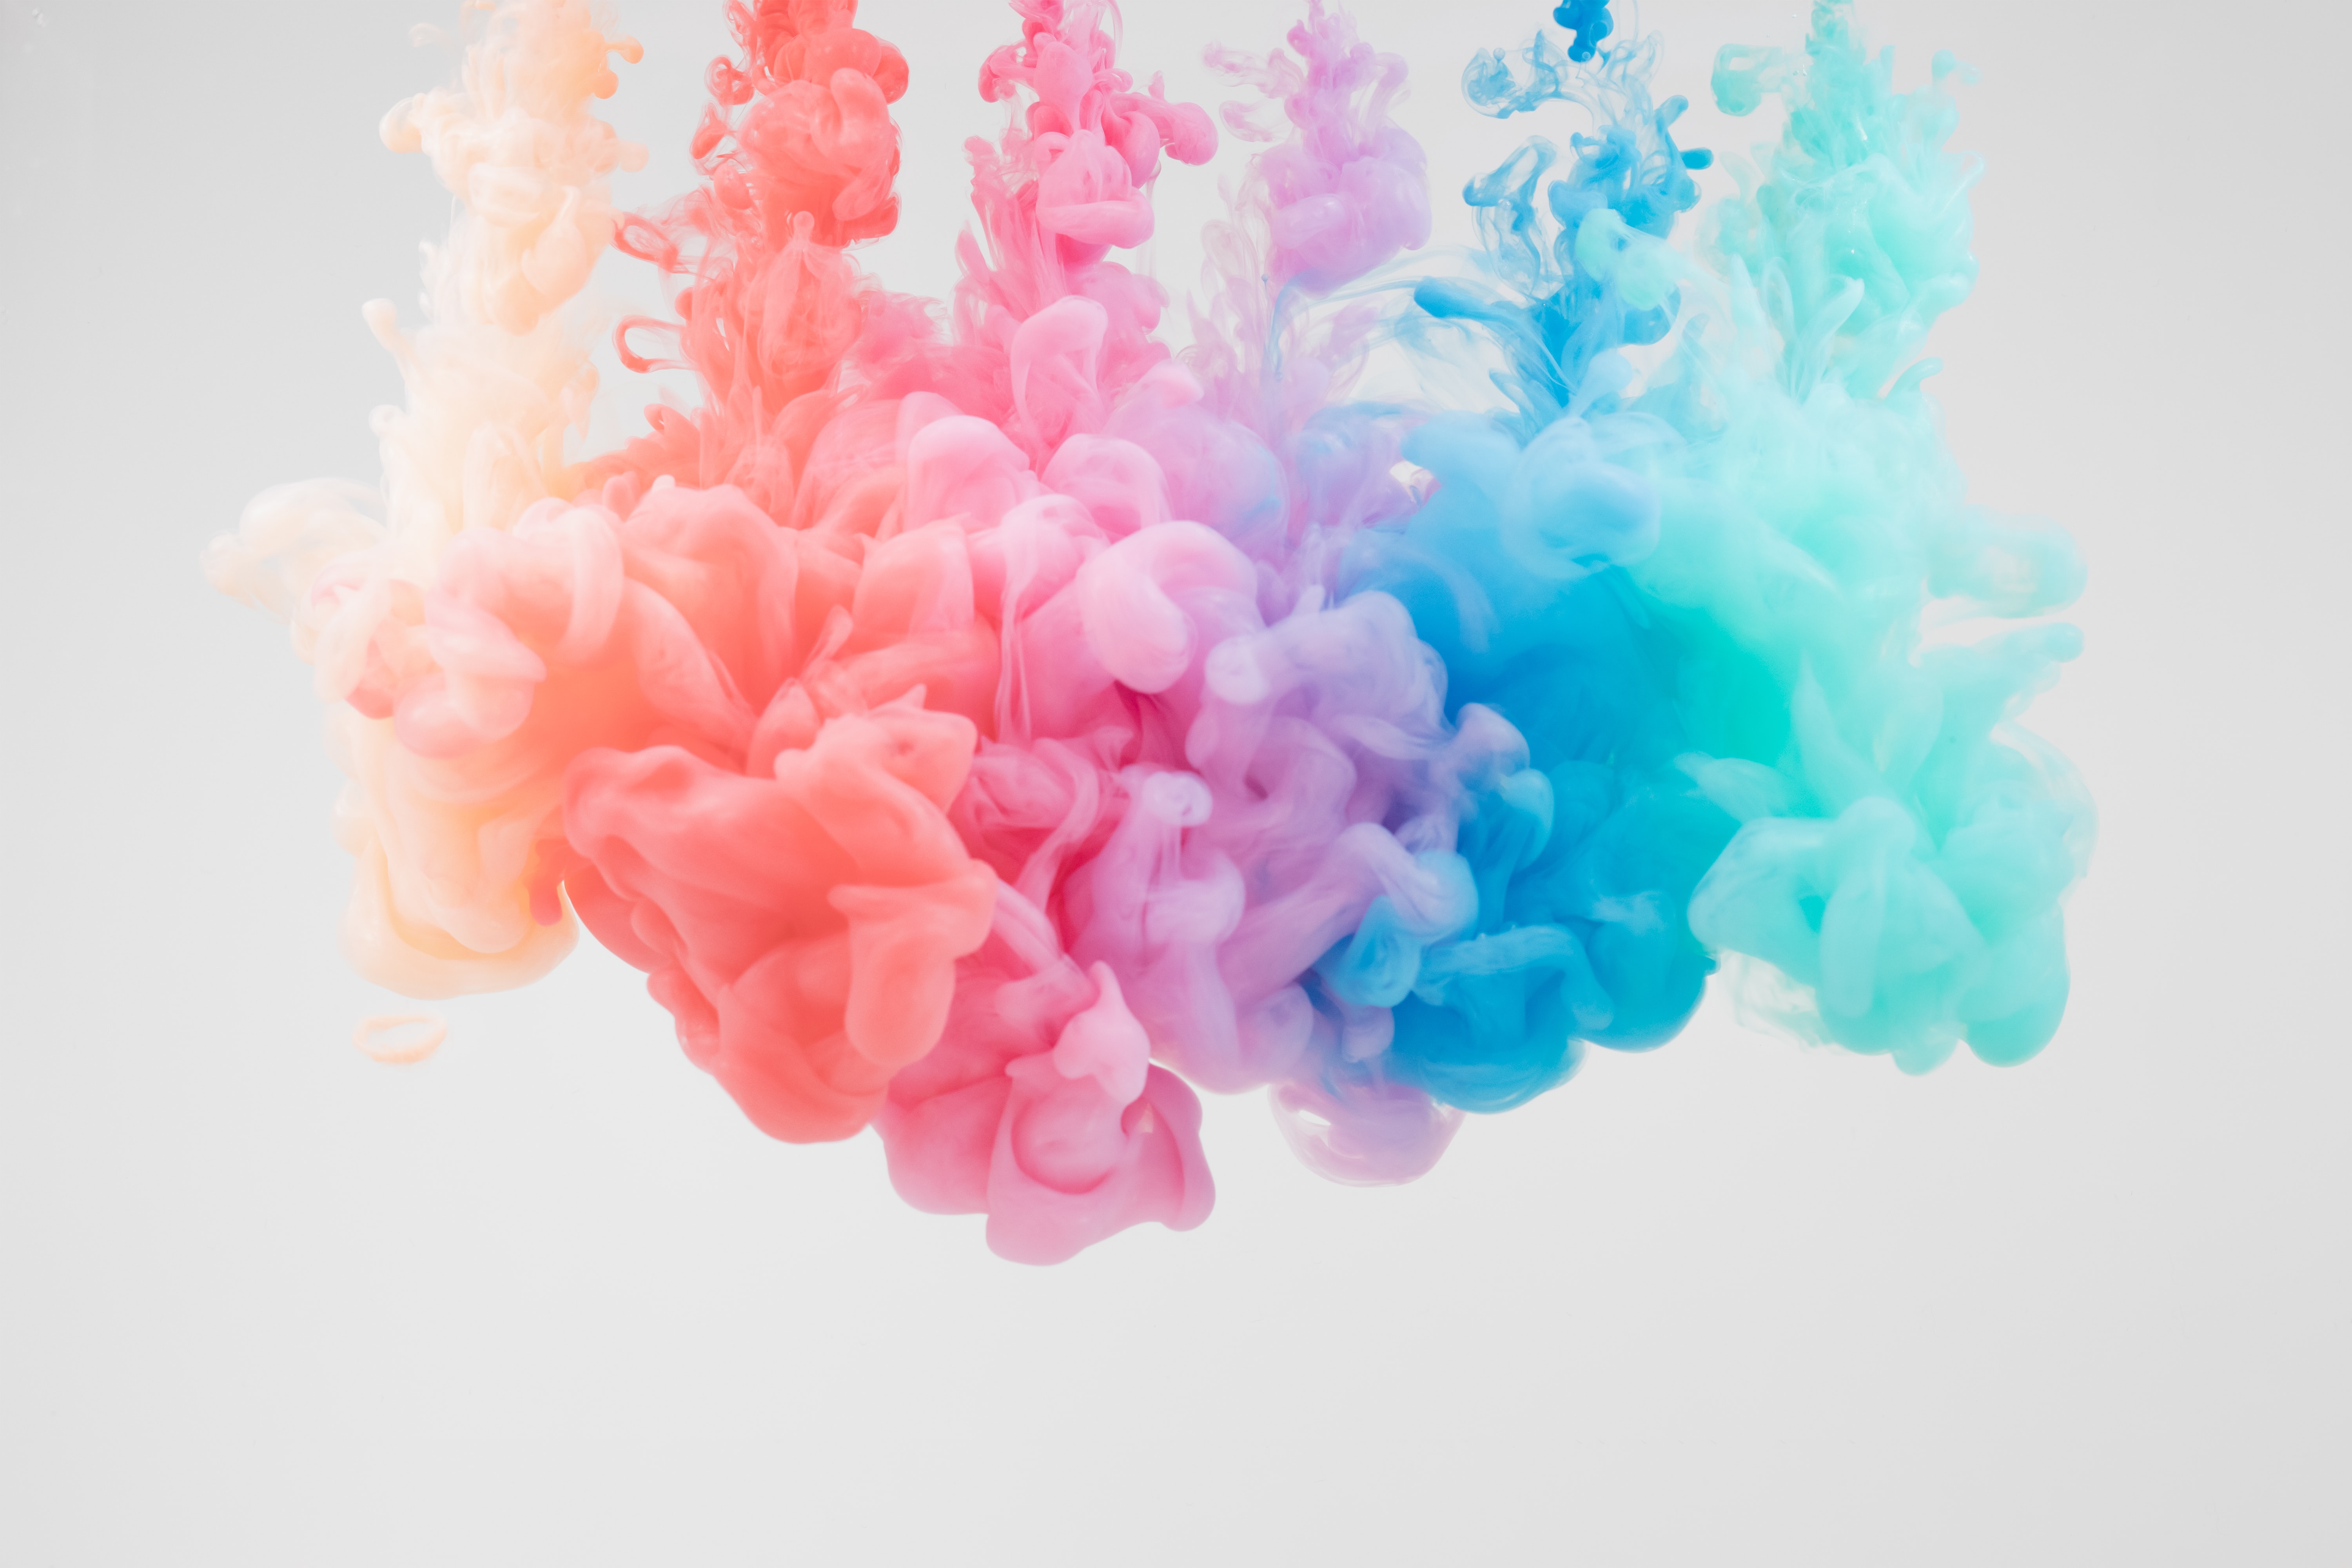 Abstract Colorful Smoke 6K wallpaper download